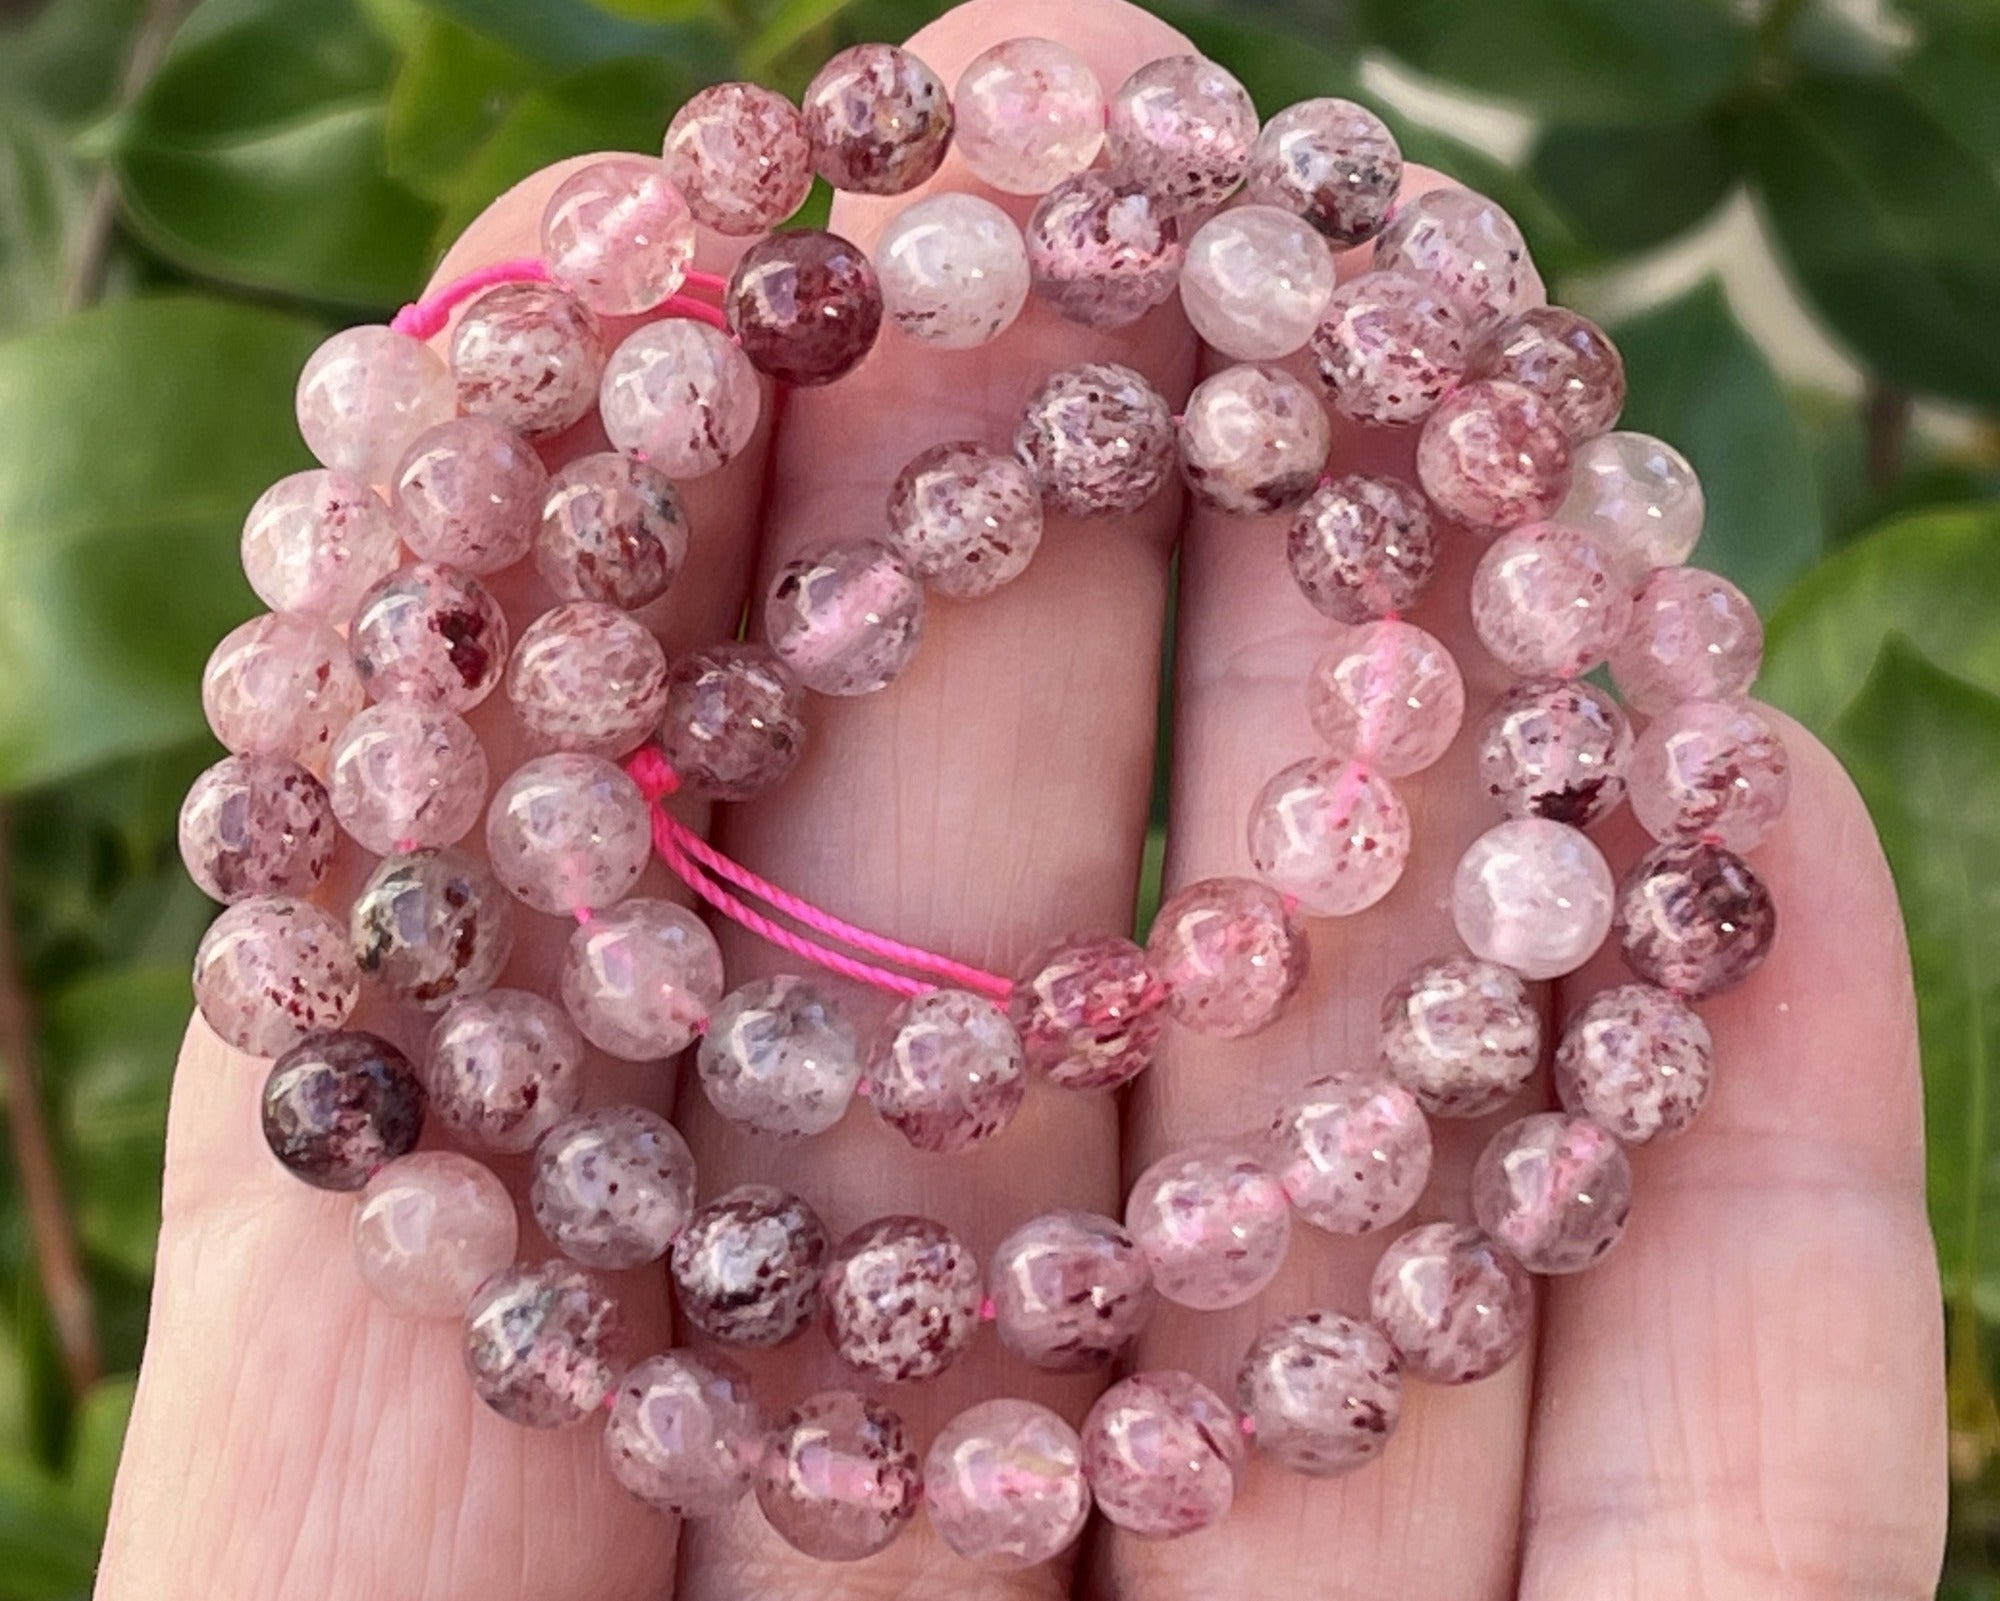 Strawberry Quartz Lepidocrocite 6mm round natural gemstone beads 15.5" strand